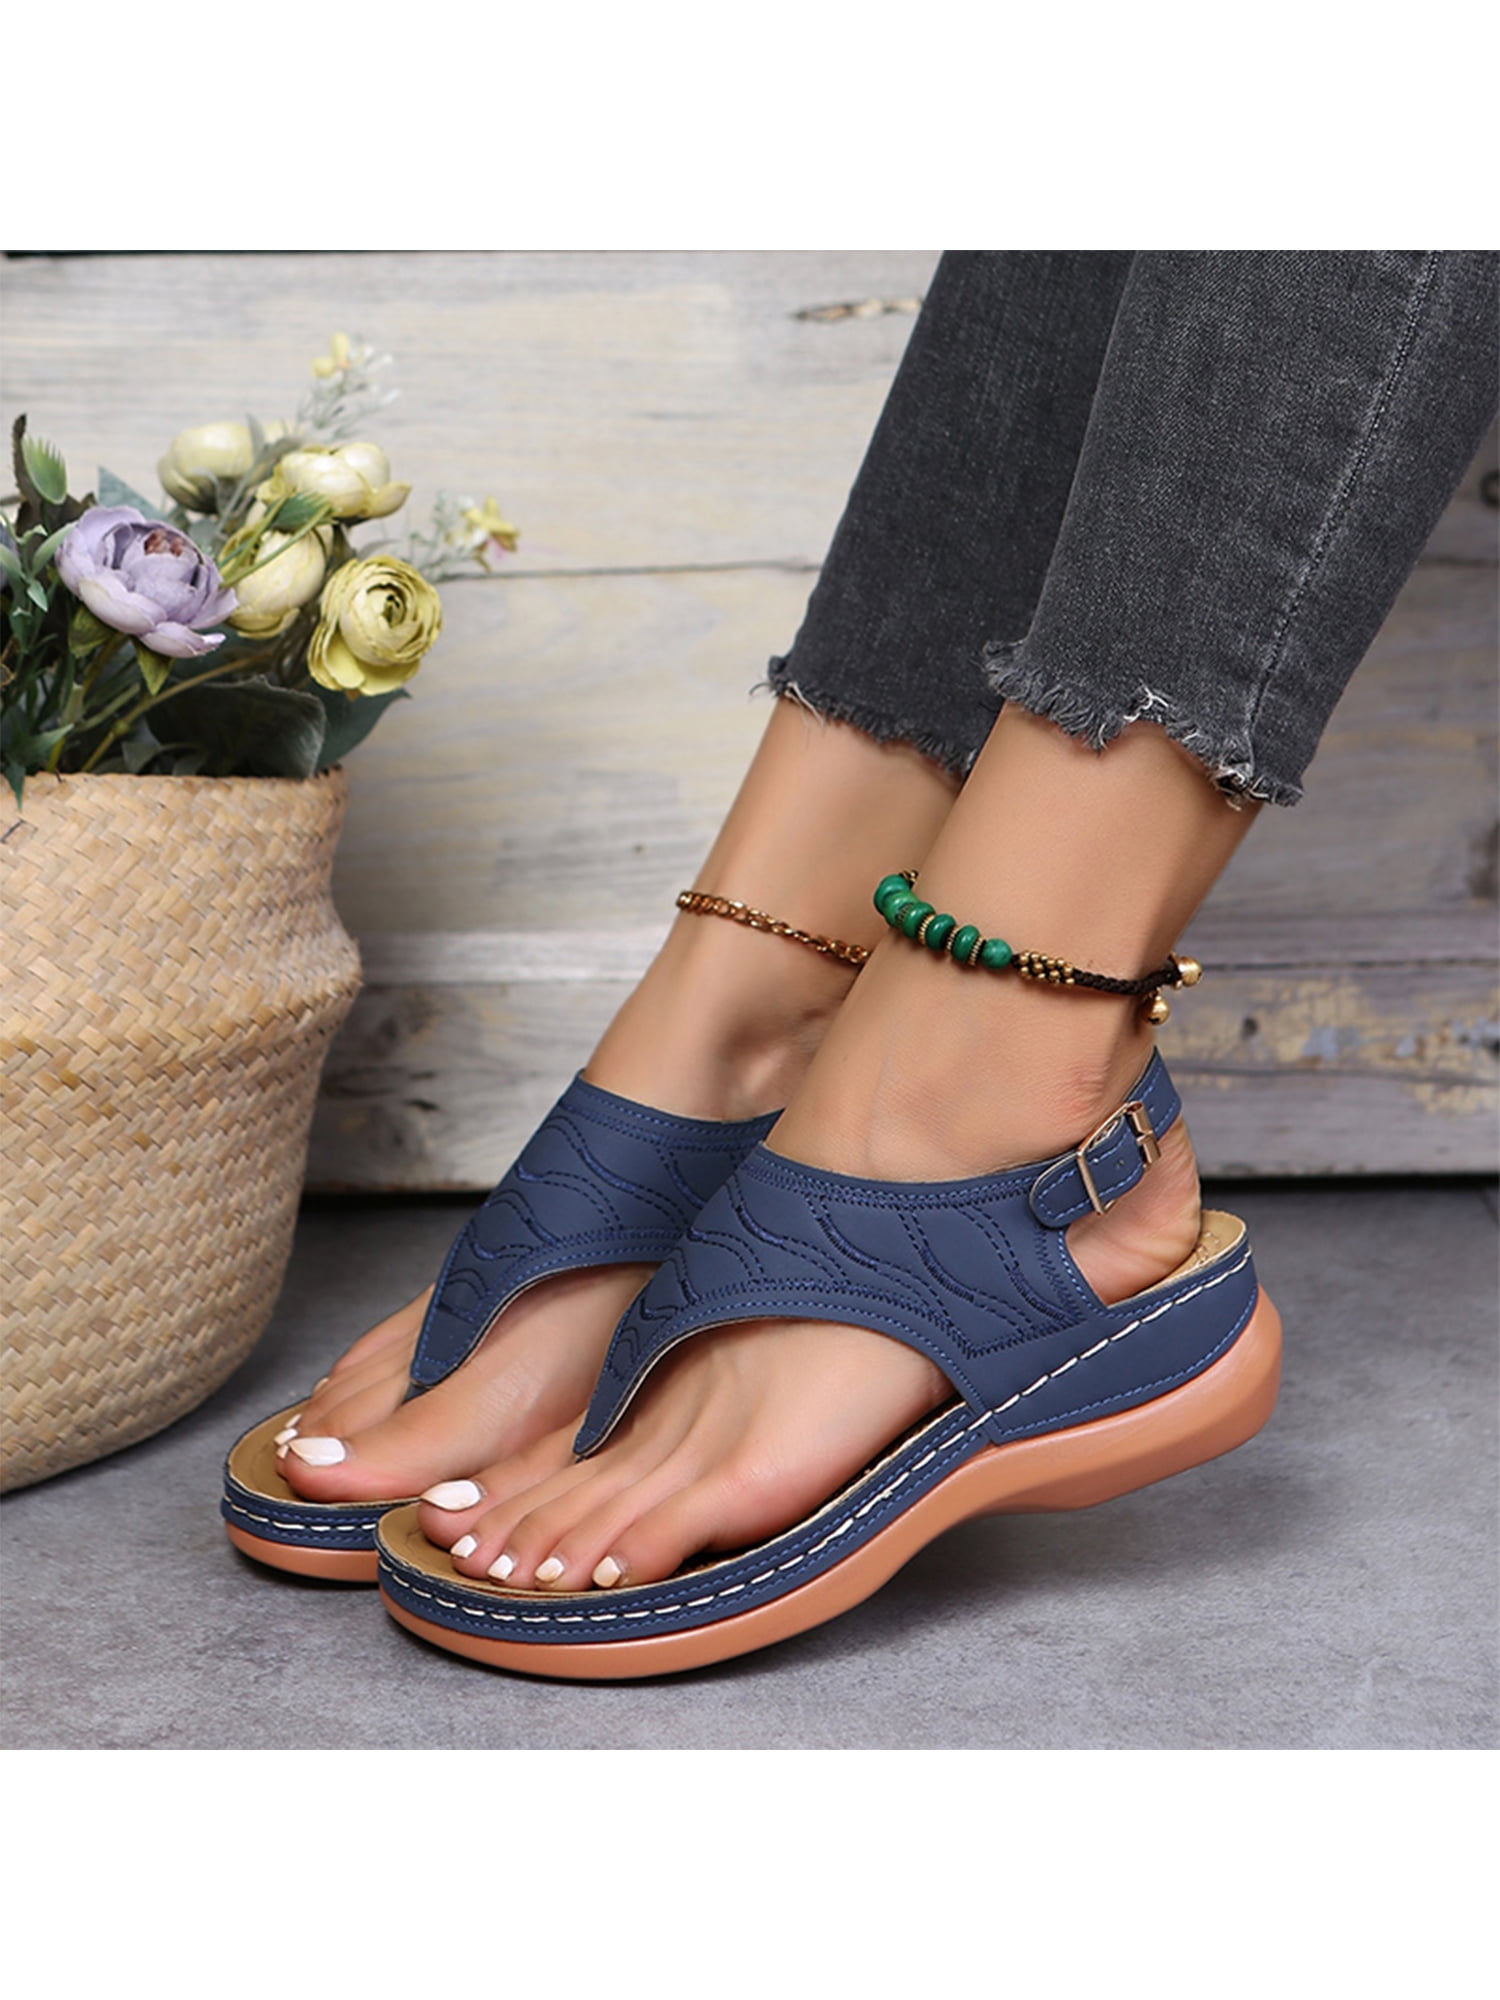 NIMIZIA Womens Sandals Zipper Thick high Heels Cellophane Tape Open Toe Comfortable Cute Platform Wedge Sandals Casual Summer Beach Sandals for Women 